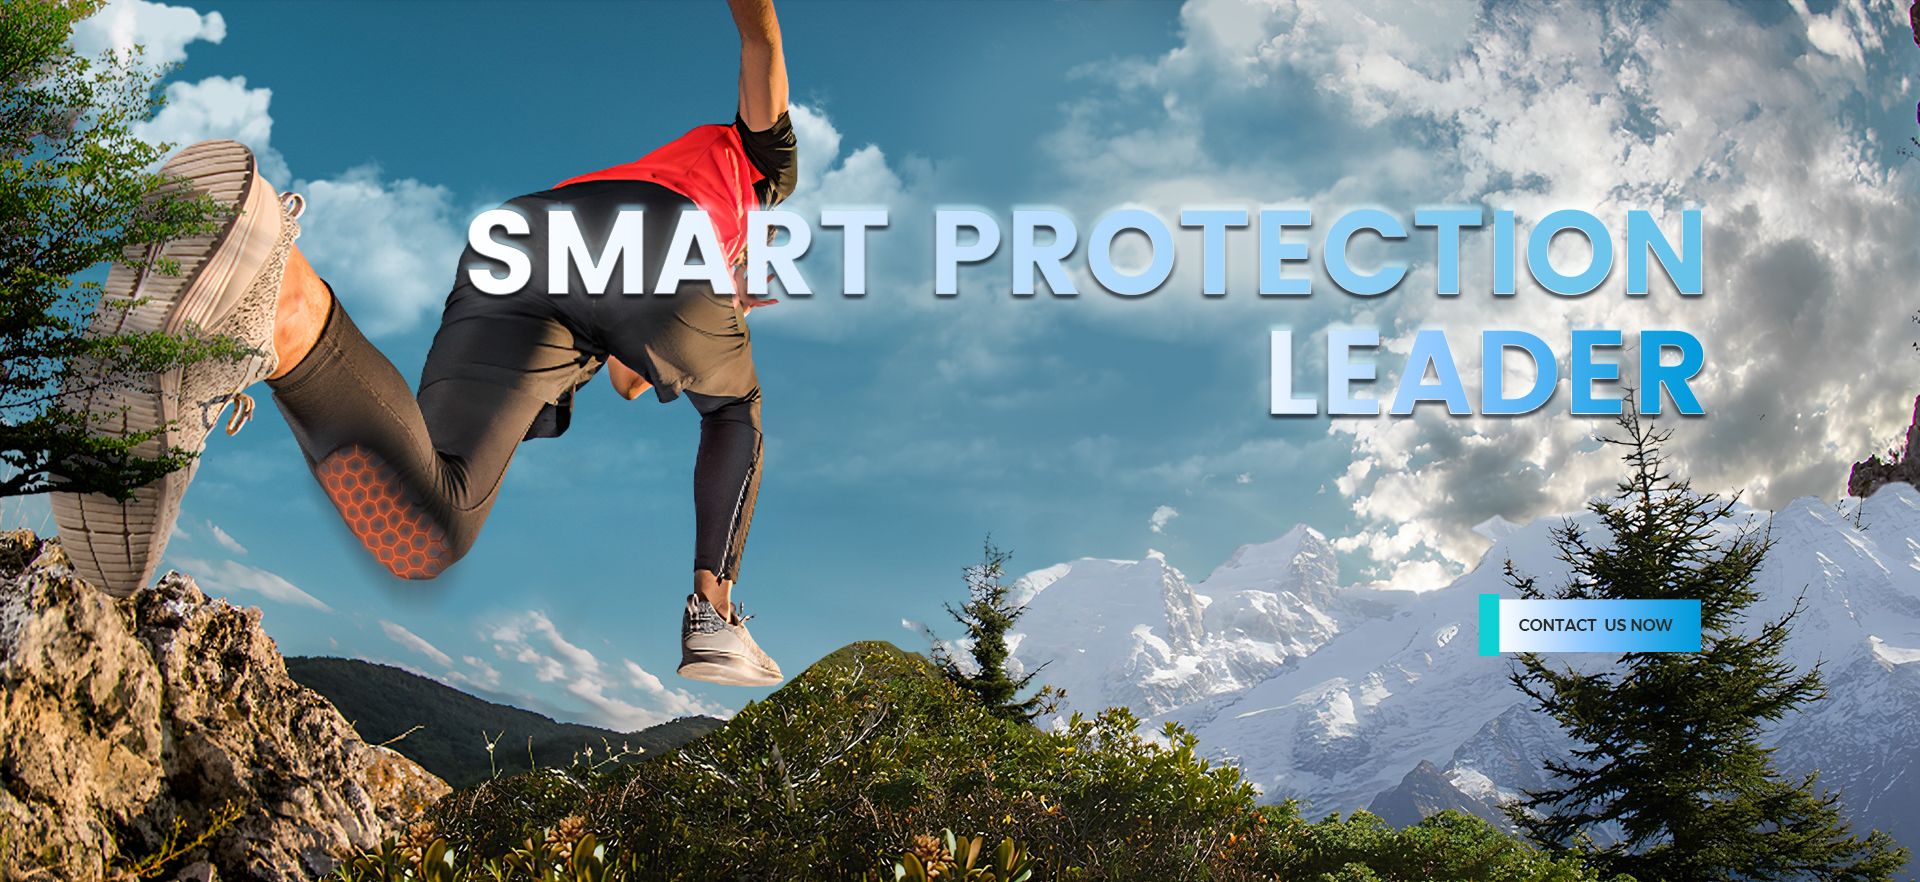 Smart Protection Leader